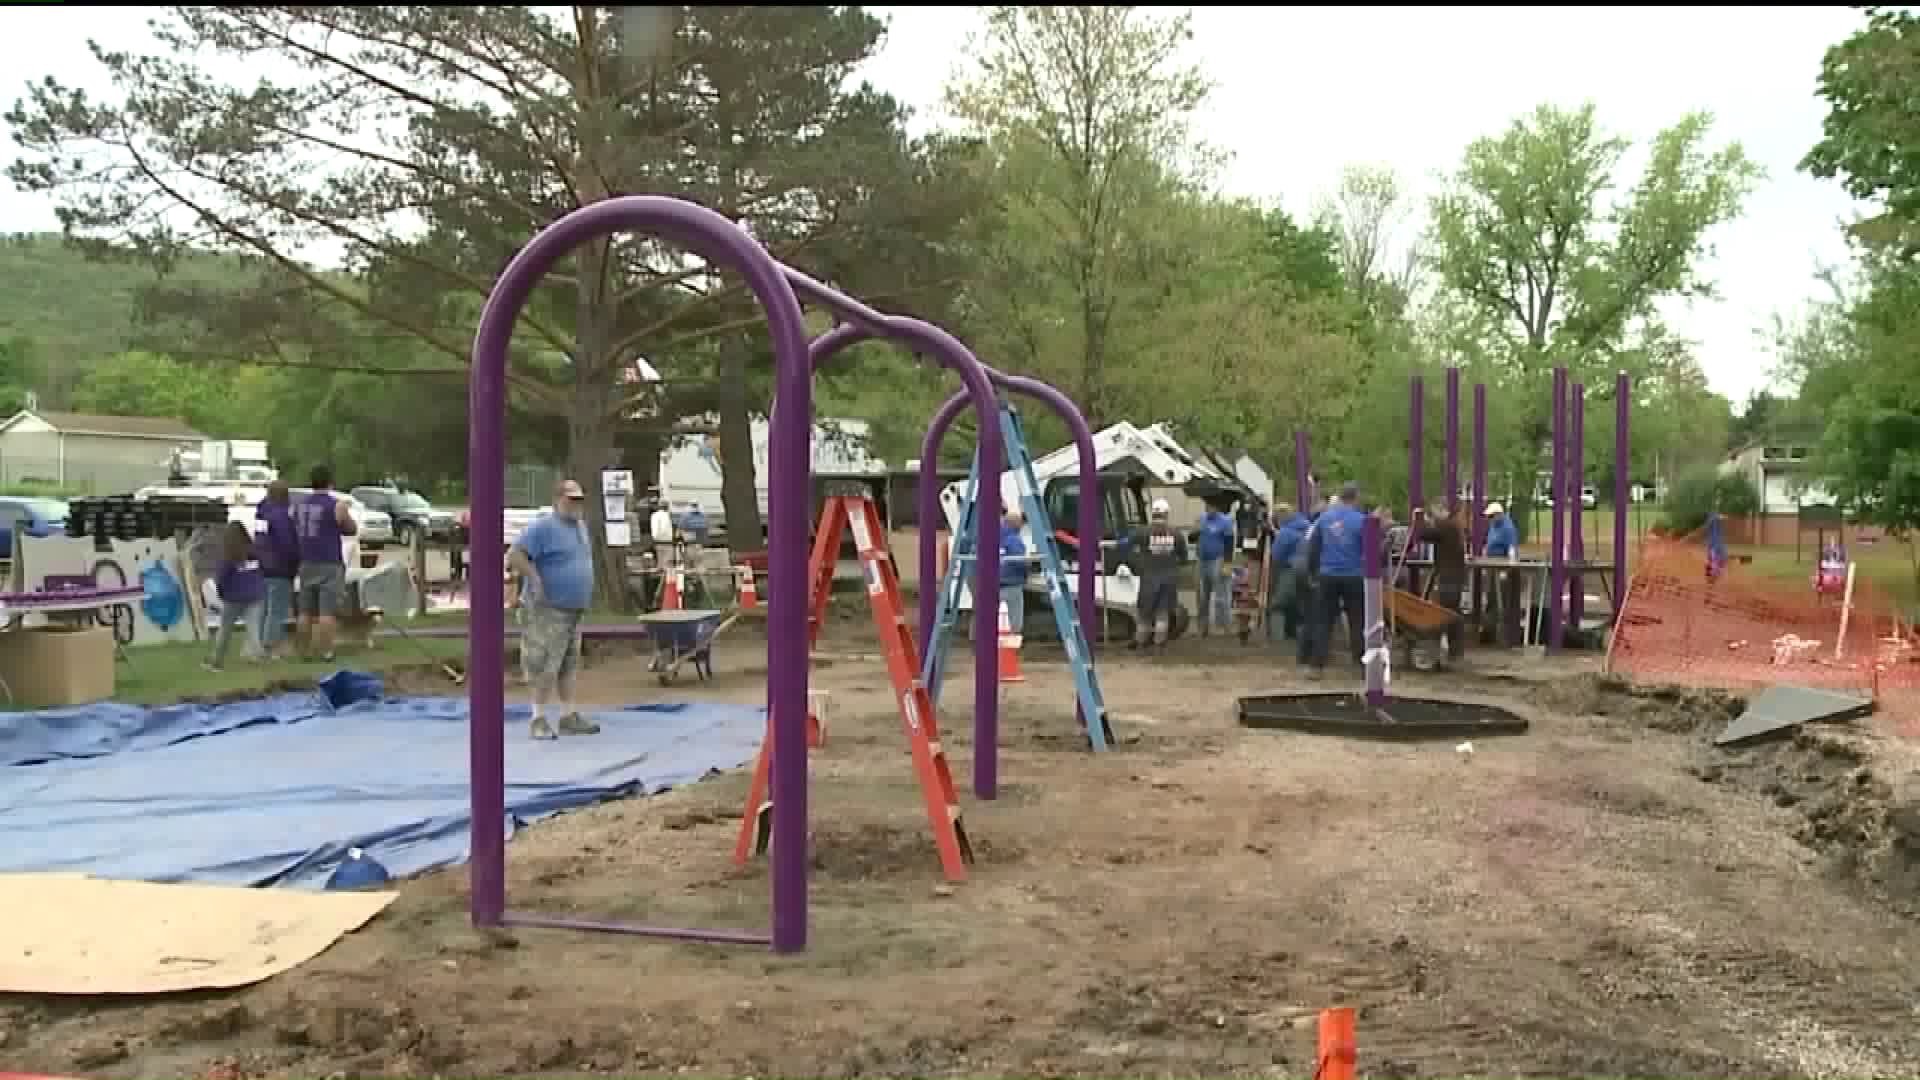 Playground Built In Memory of Little Girl (6)